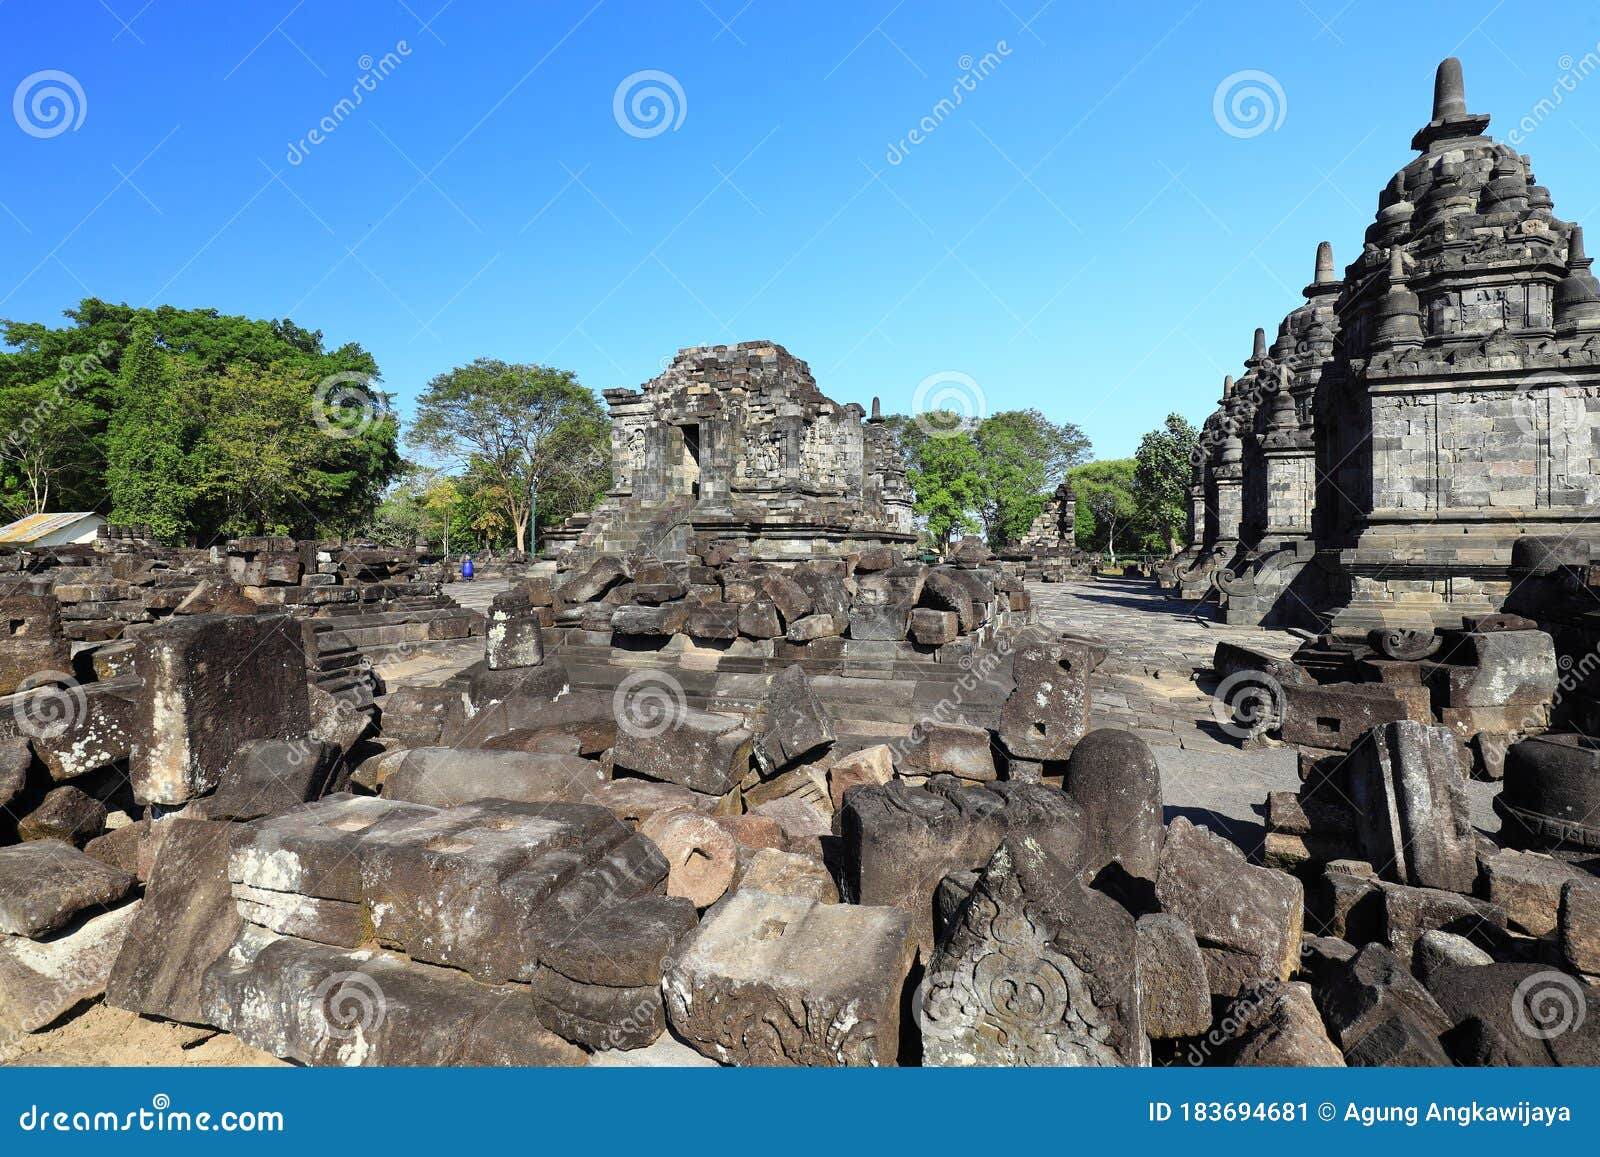 Ruins Of Candi Jago Klaten  Indonesia  Stock Image Image 